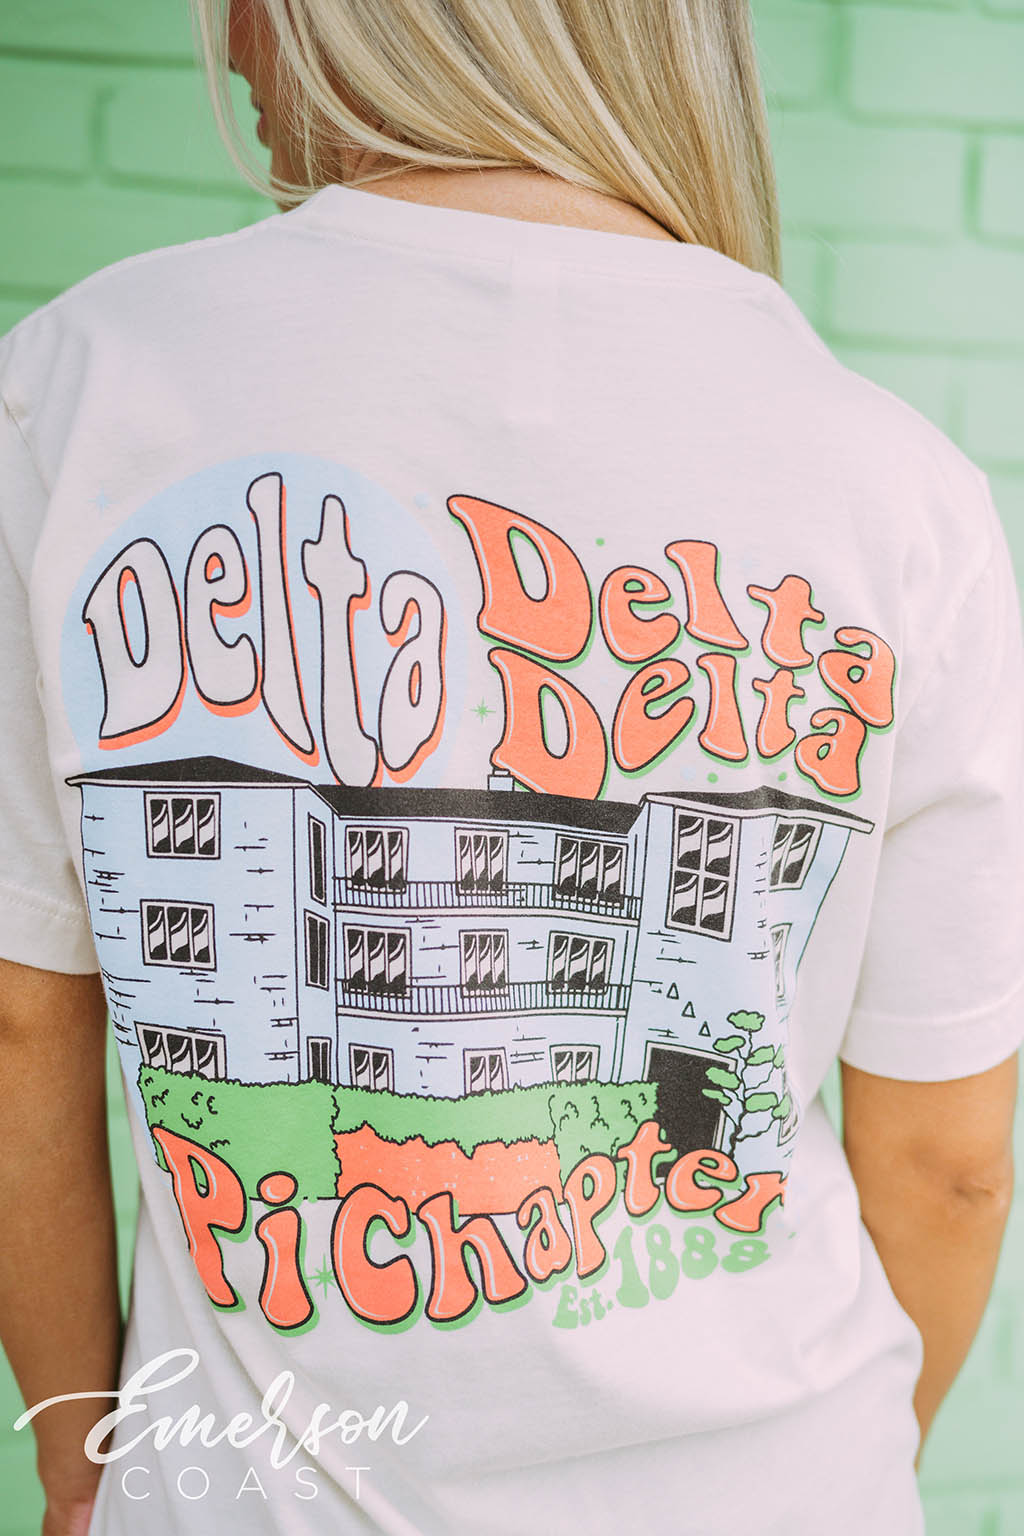 Delta Delta Delta PR Chapter House Tee